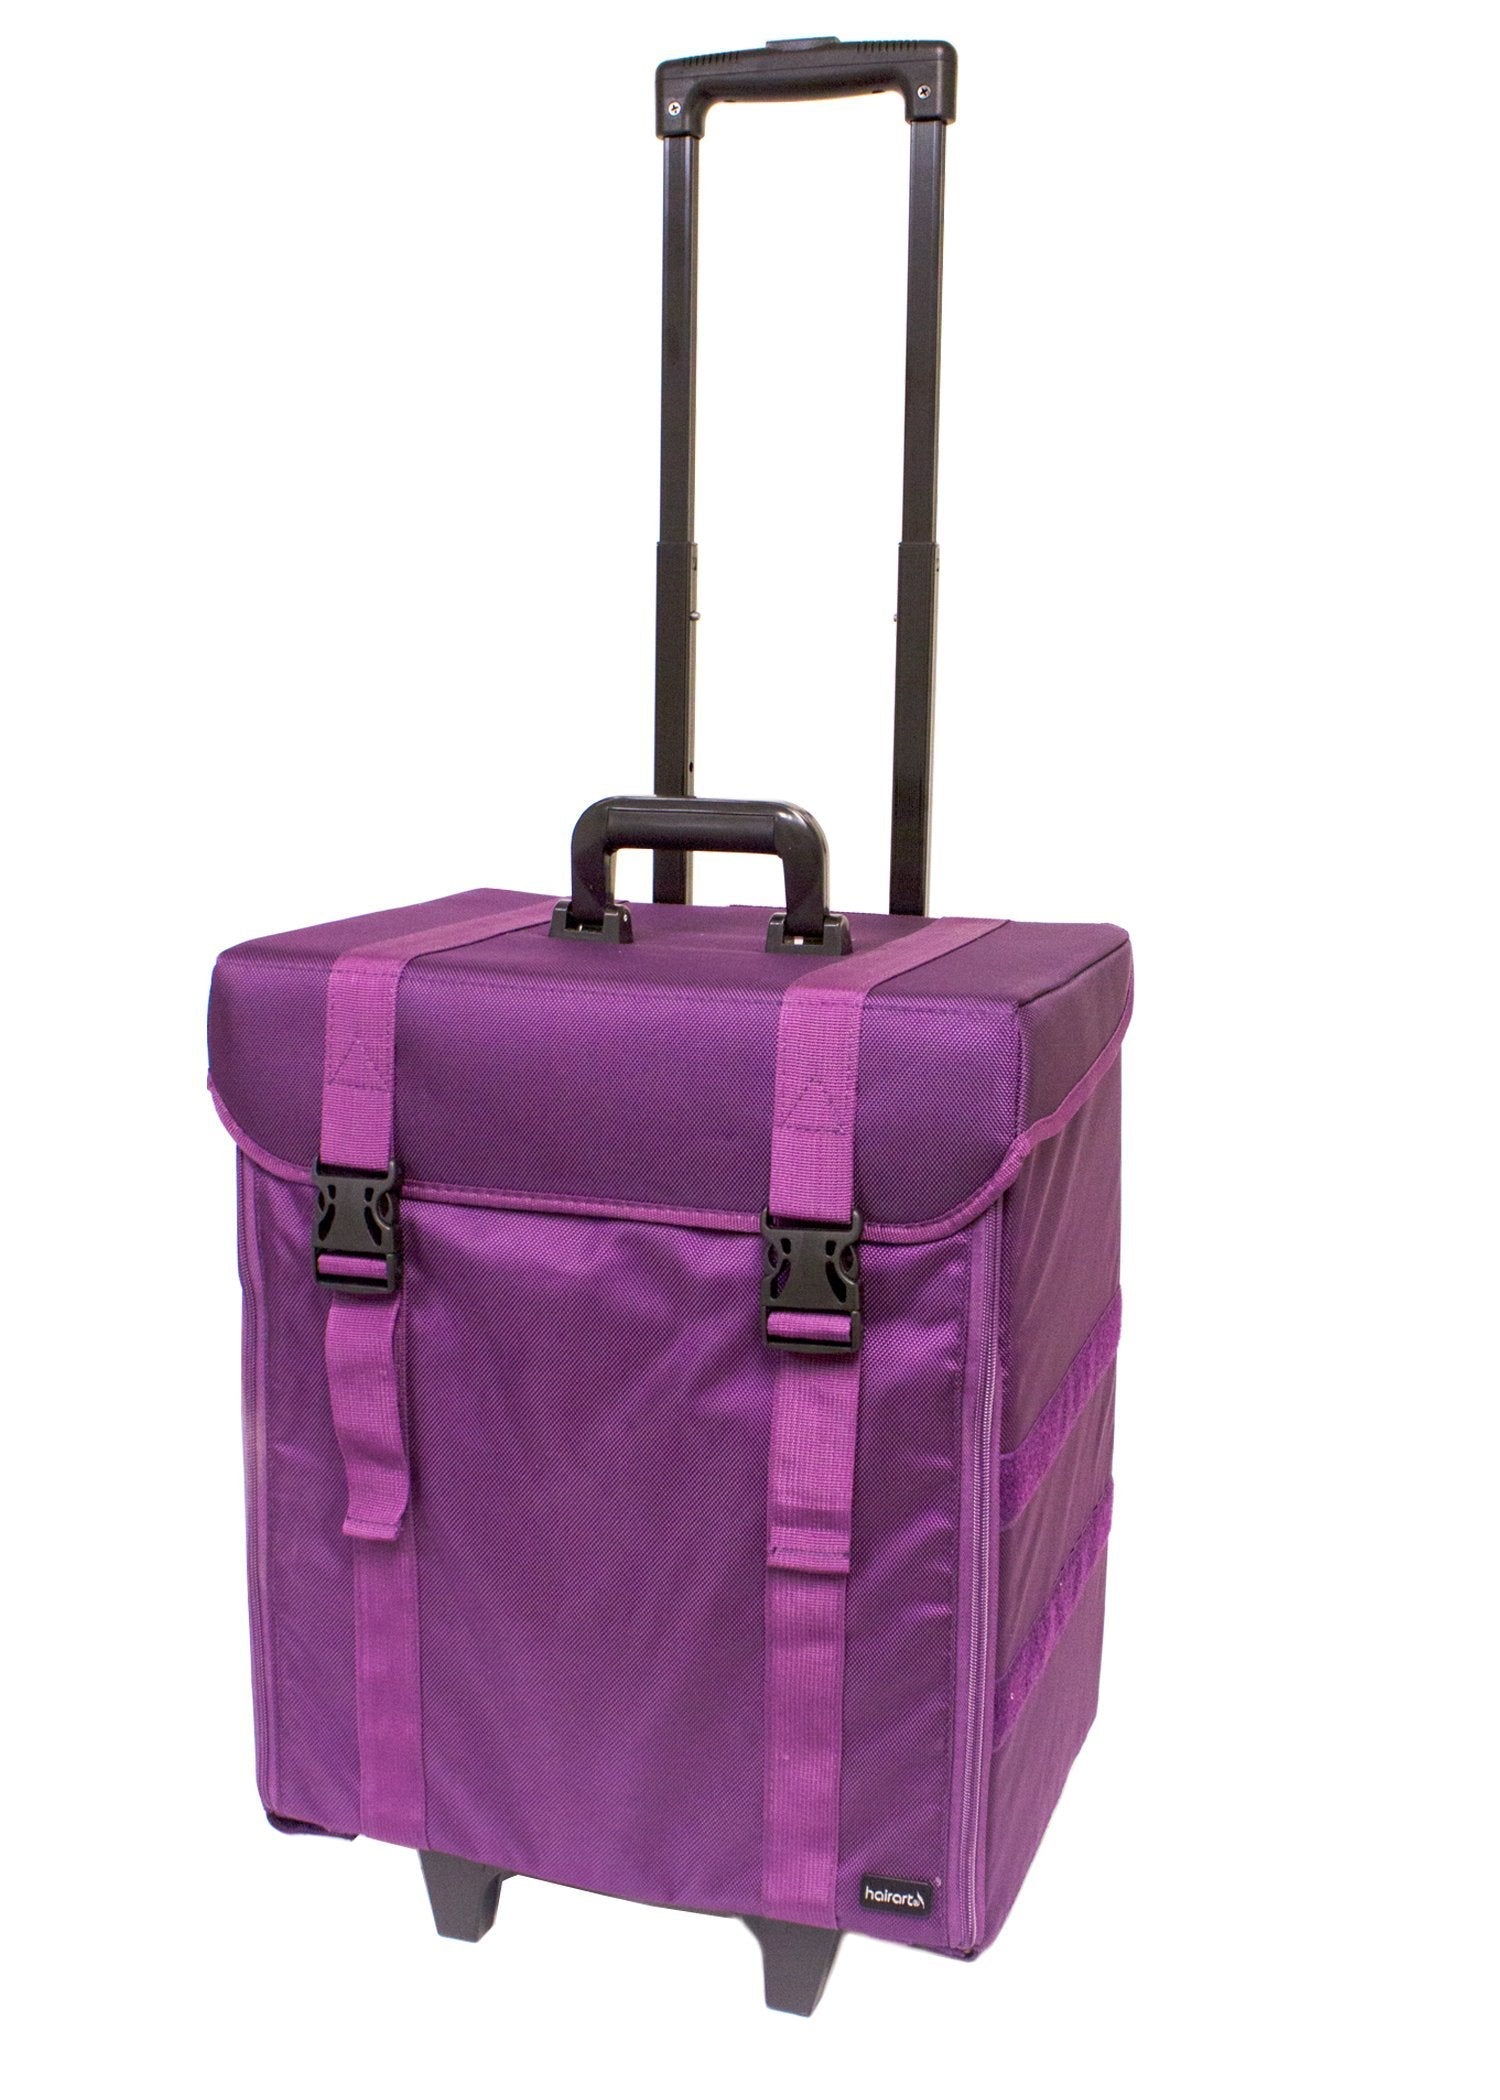 Professional Beauty Nylon Case - Medium - Purple HairArt Int'l Inc.